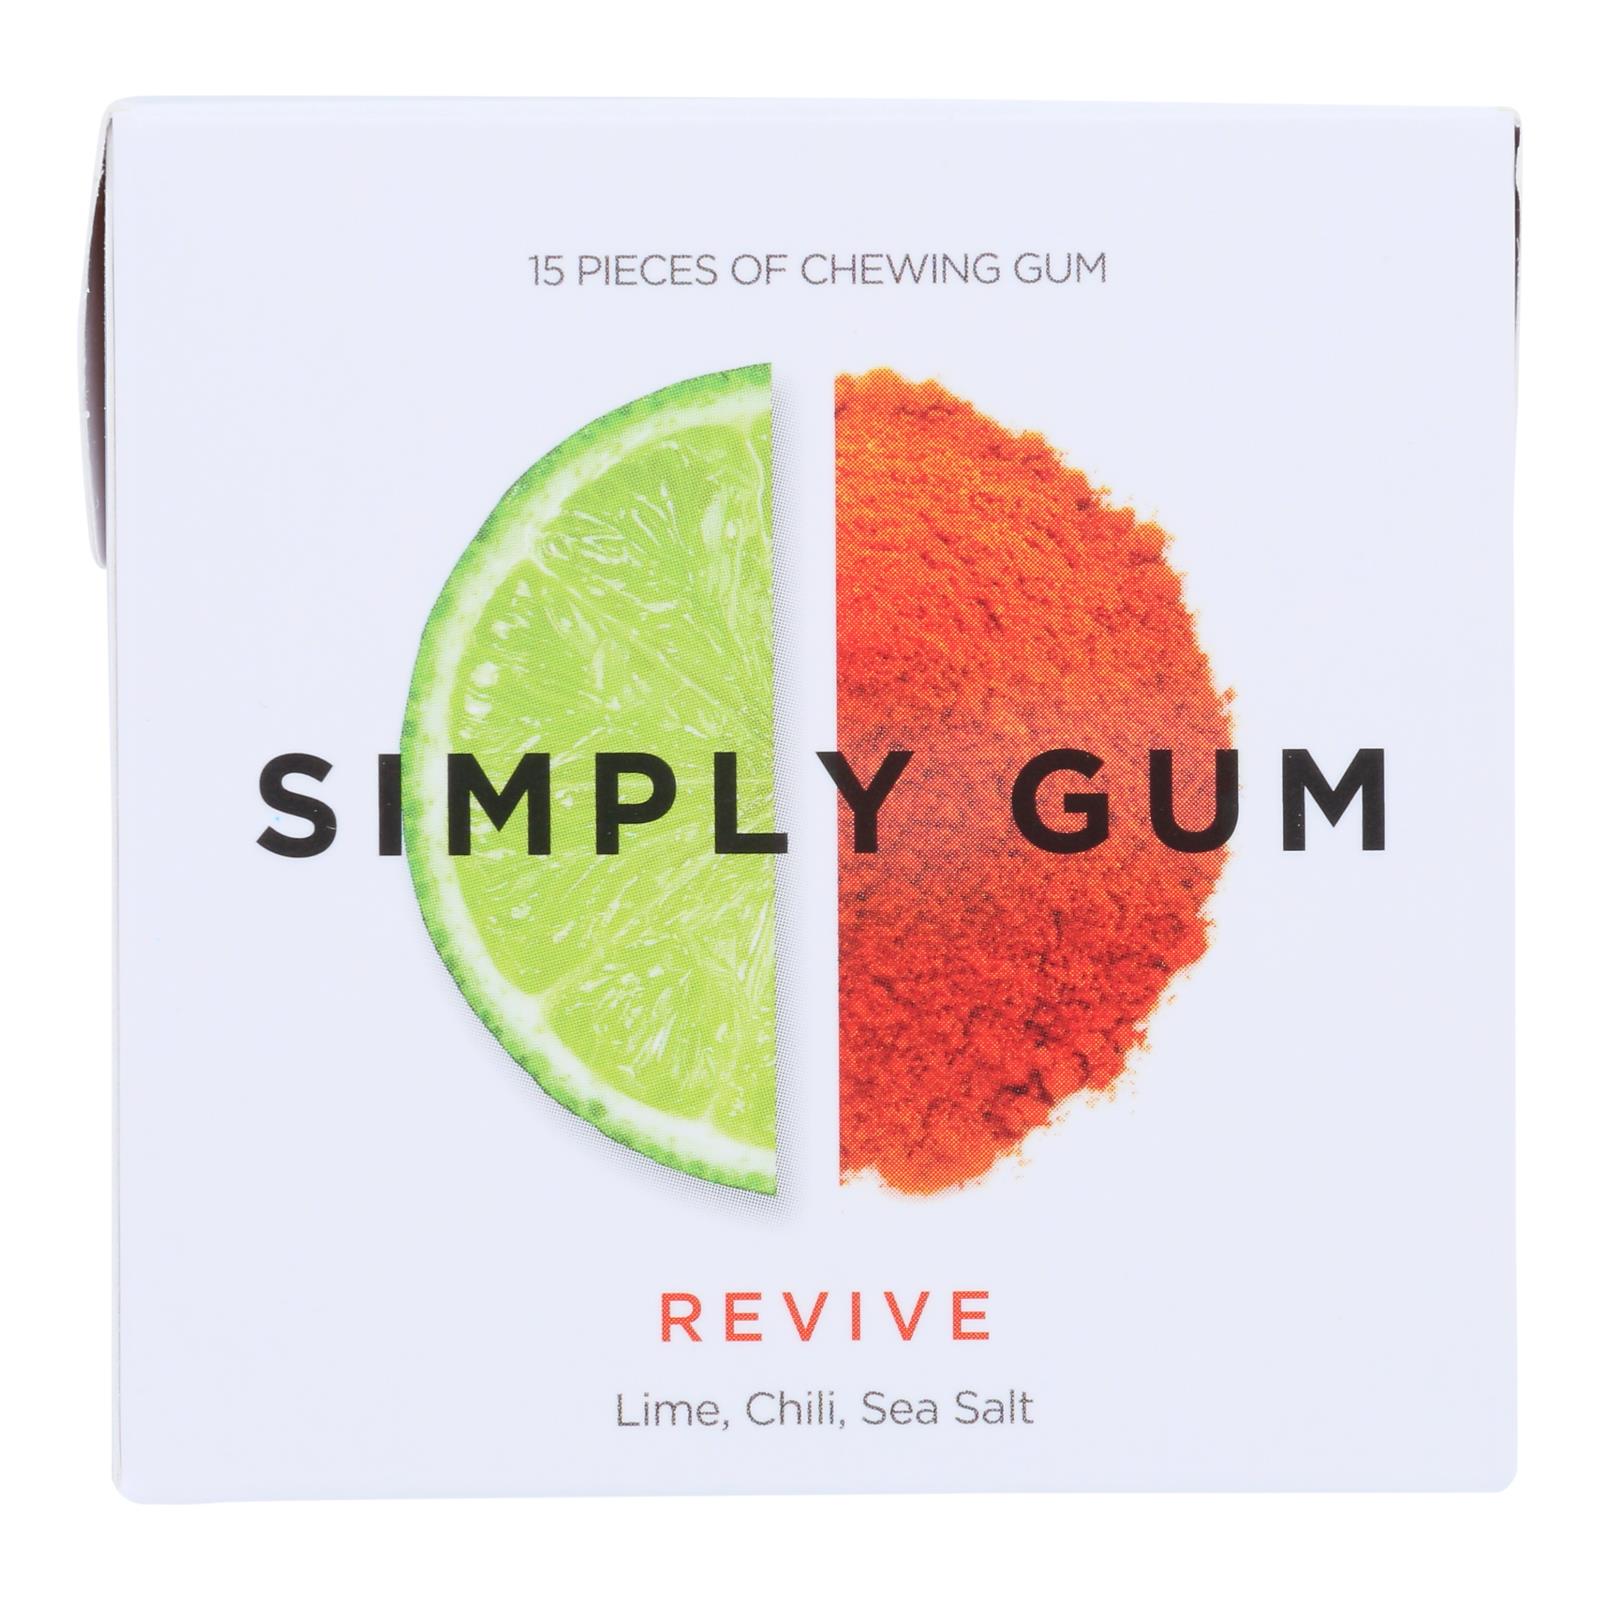 Simply Gum - Gum Revive - 12개 묶음상품 - 15 CT